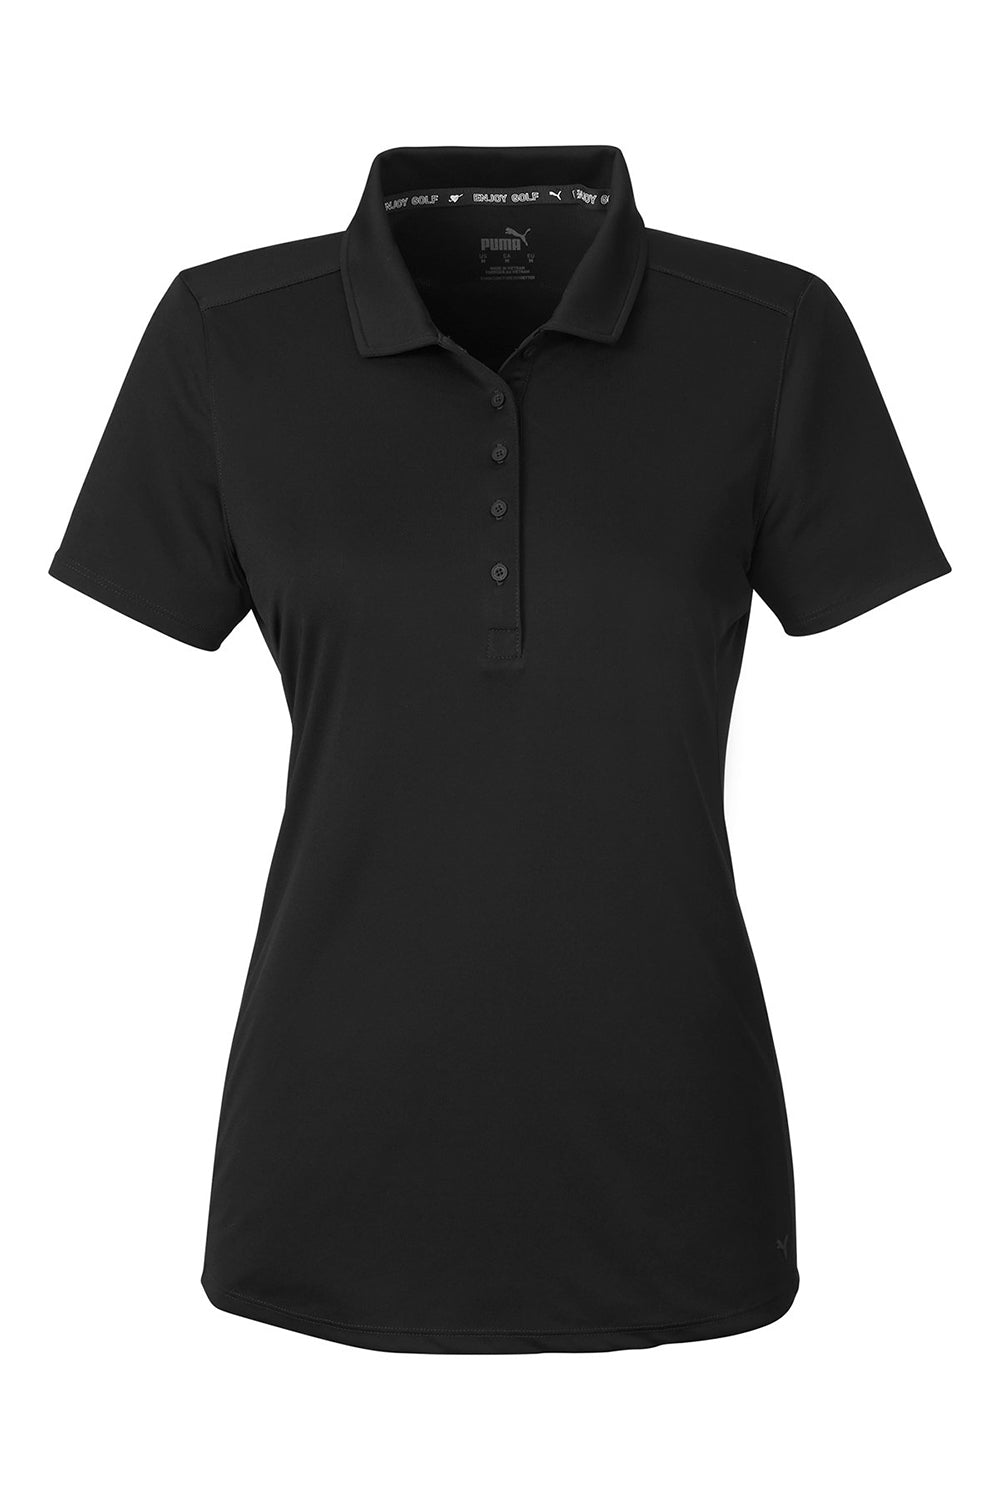 Puma 532989 Womens Gamer Short Sleeve Polo Shirt Black Flat Front